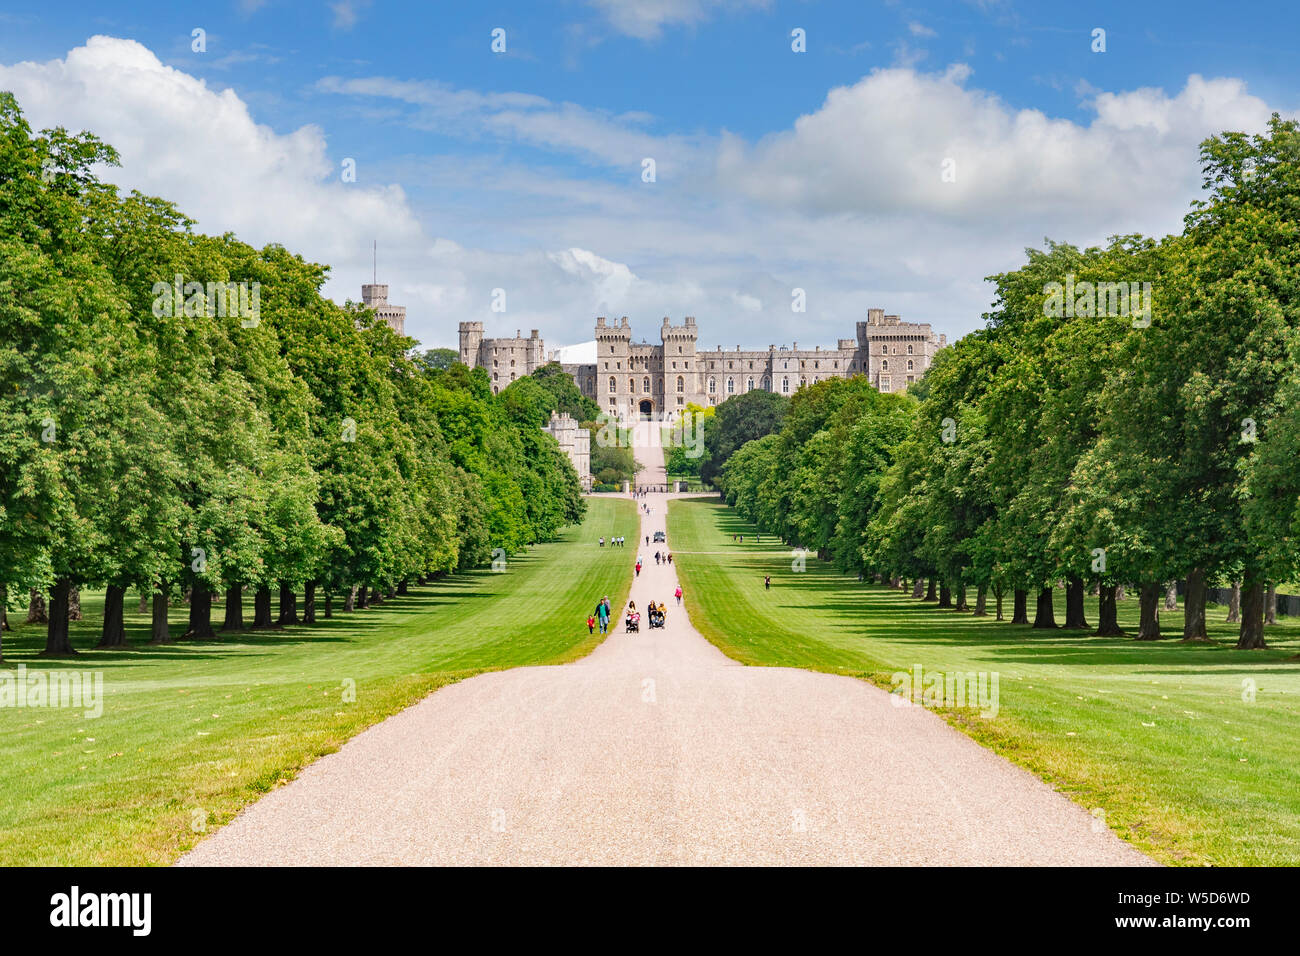 5 June 2019: Windsor, Berkshire, UK - The Long Walk in Windsor Great Park and Windsor Castle. Stock Photo